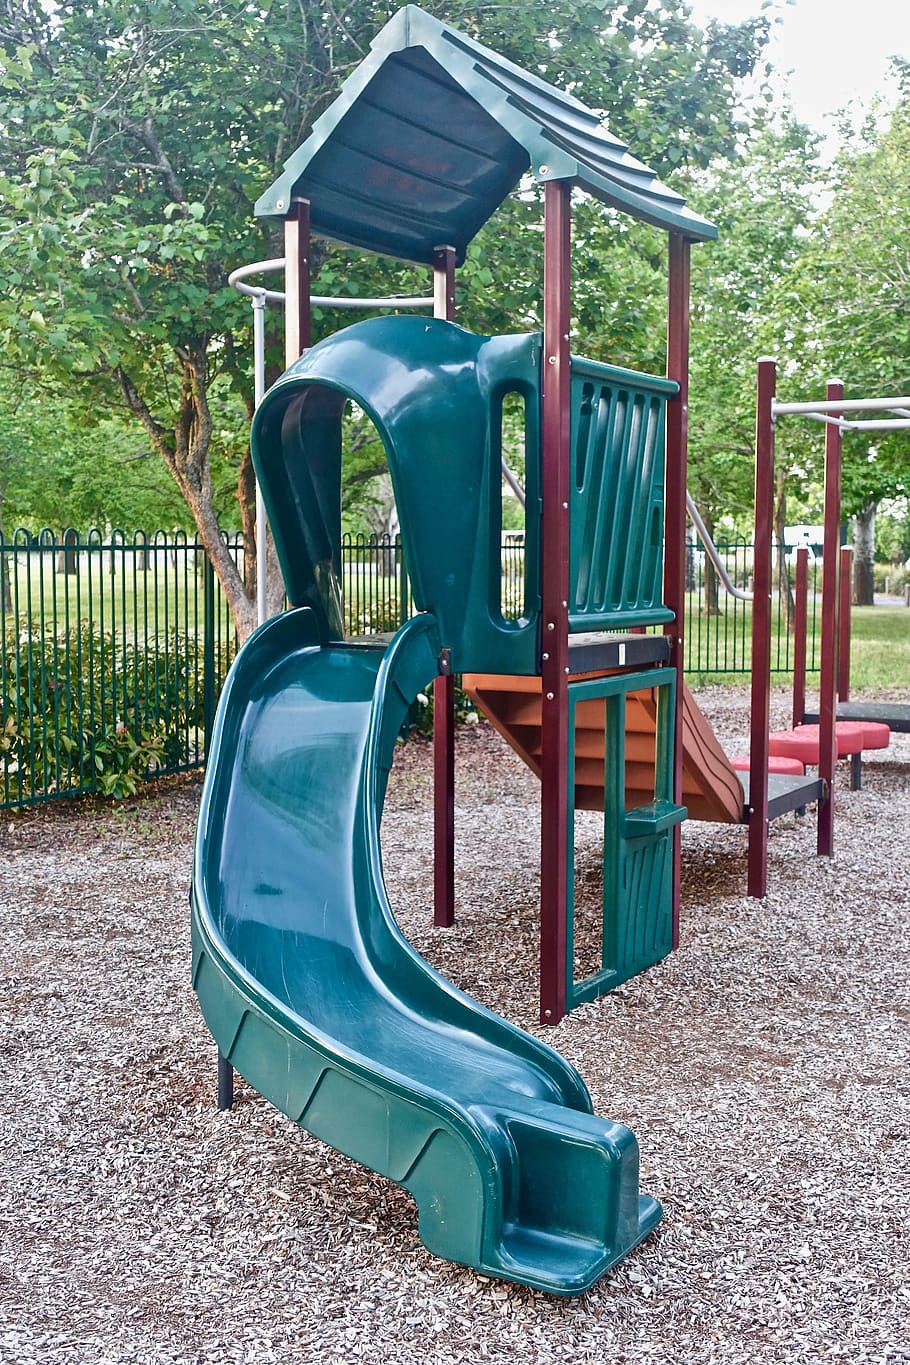 HD wallpaper: slide, playground, kids, equipment, climbing, frame, outdoor play equipment - Wallpaper Flare